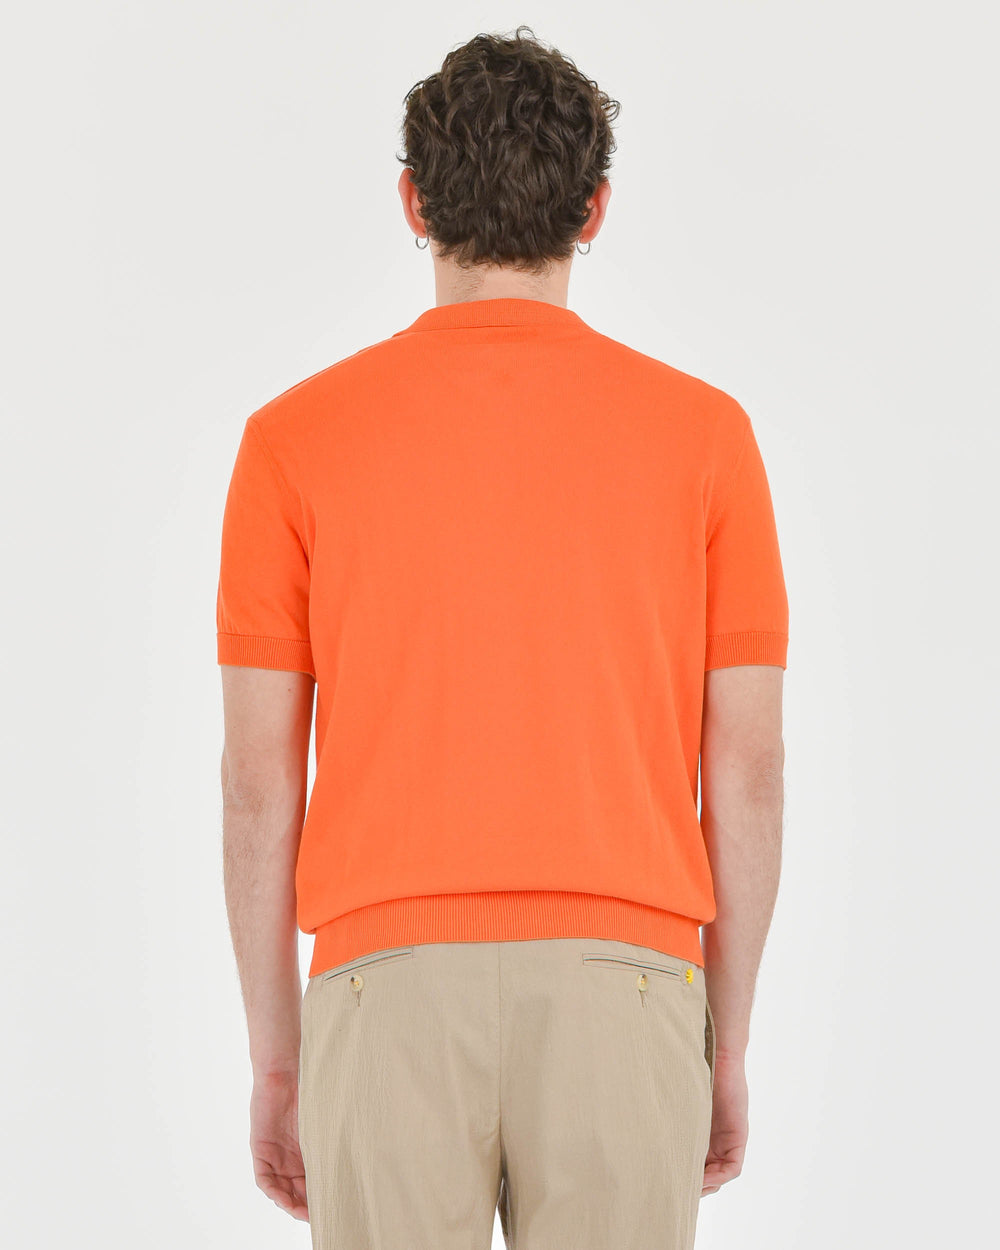 orange cotton short-sleeved polo shirt